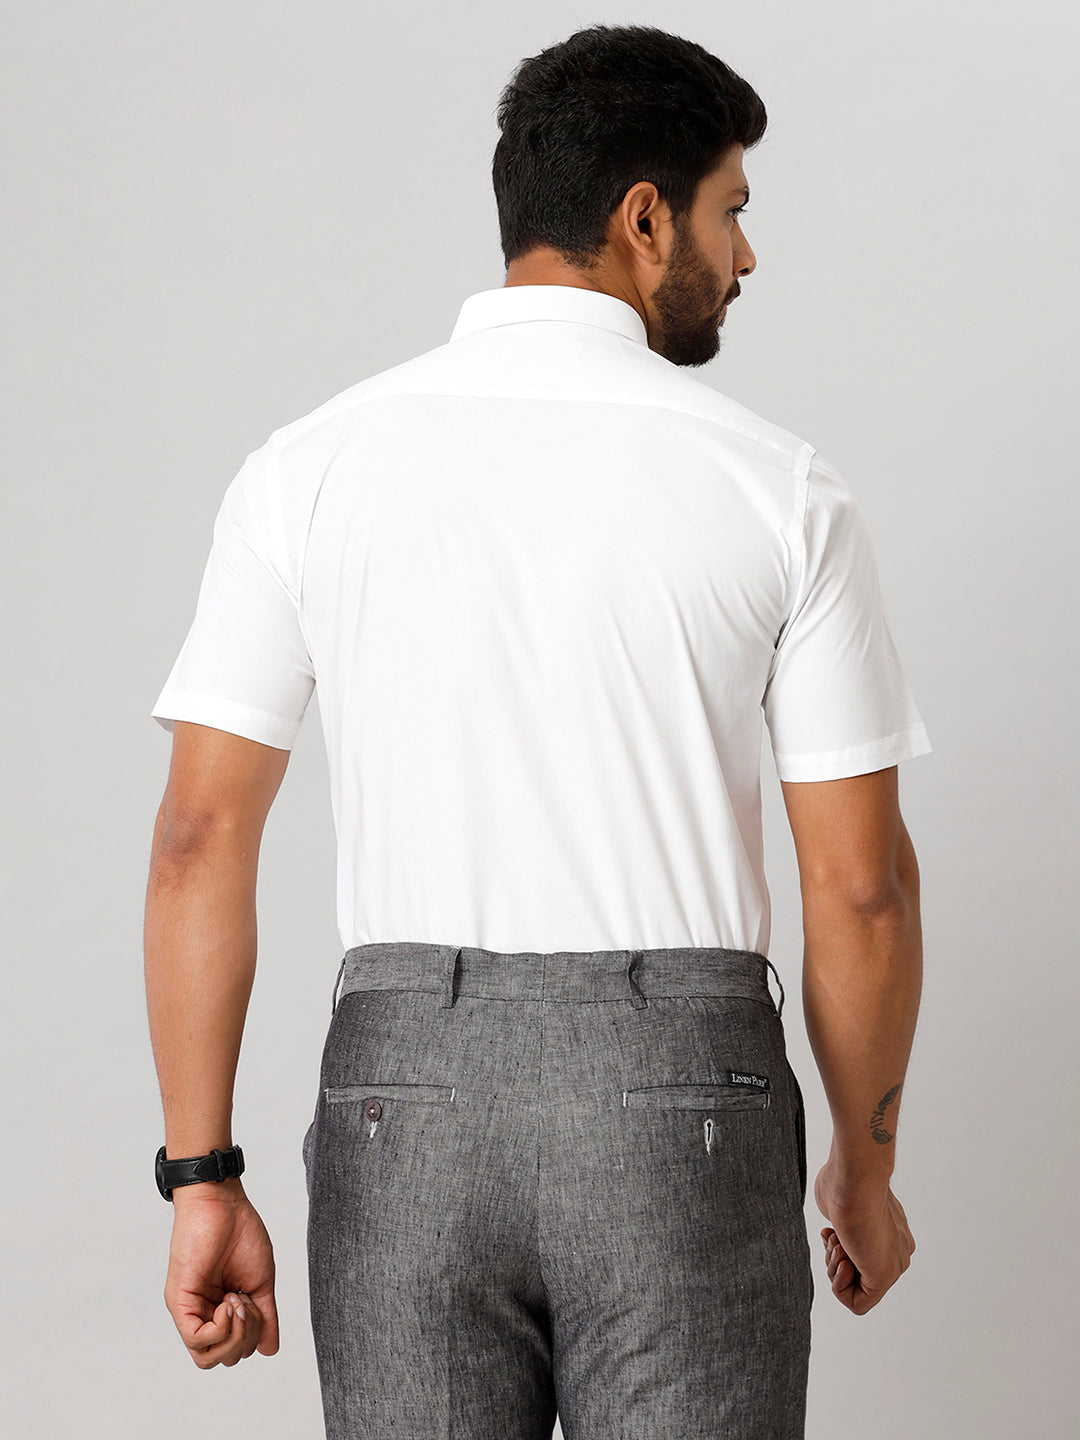 Mens uniform 100% Cotton Half Sleeve White Shirt Victory-Back view